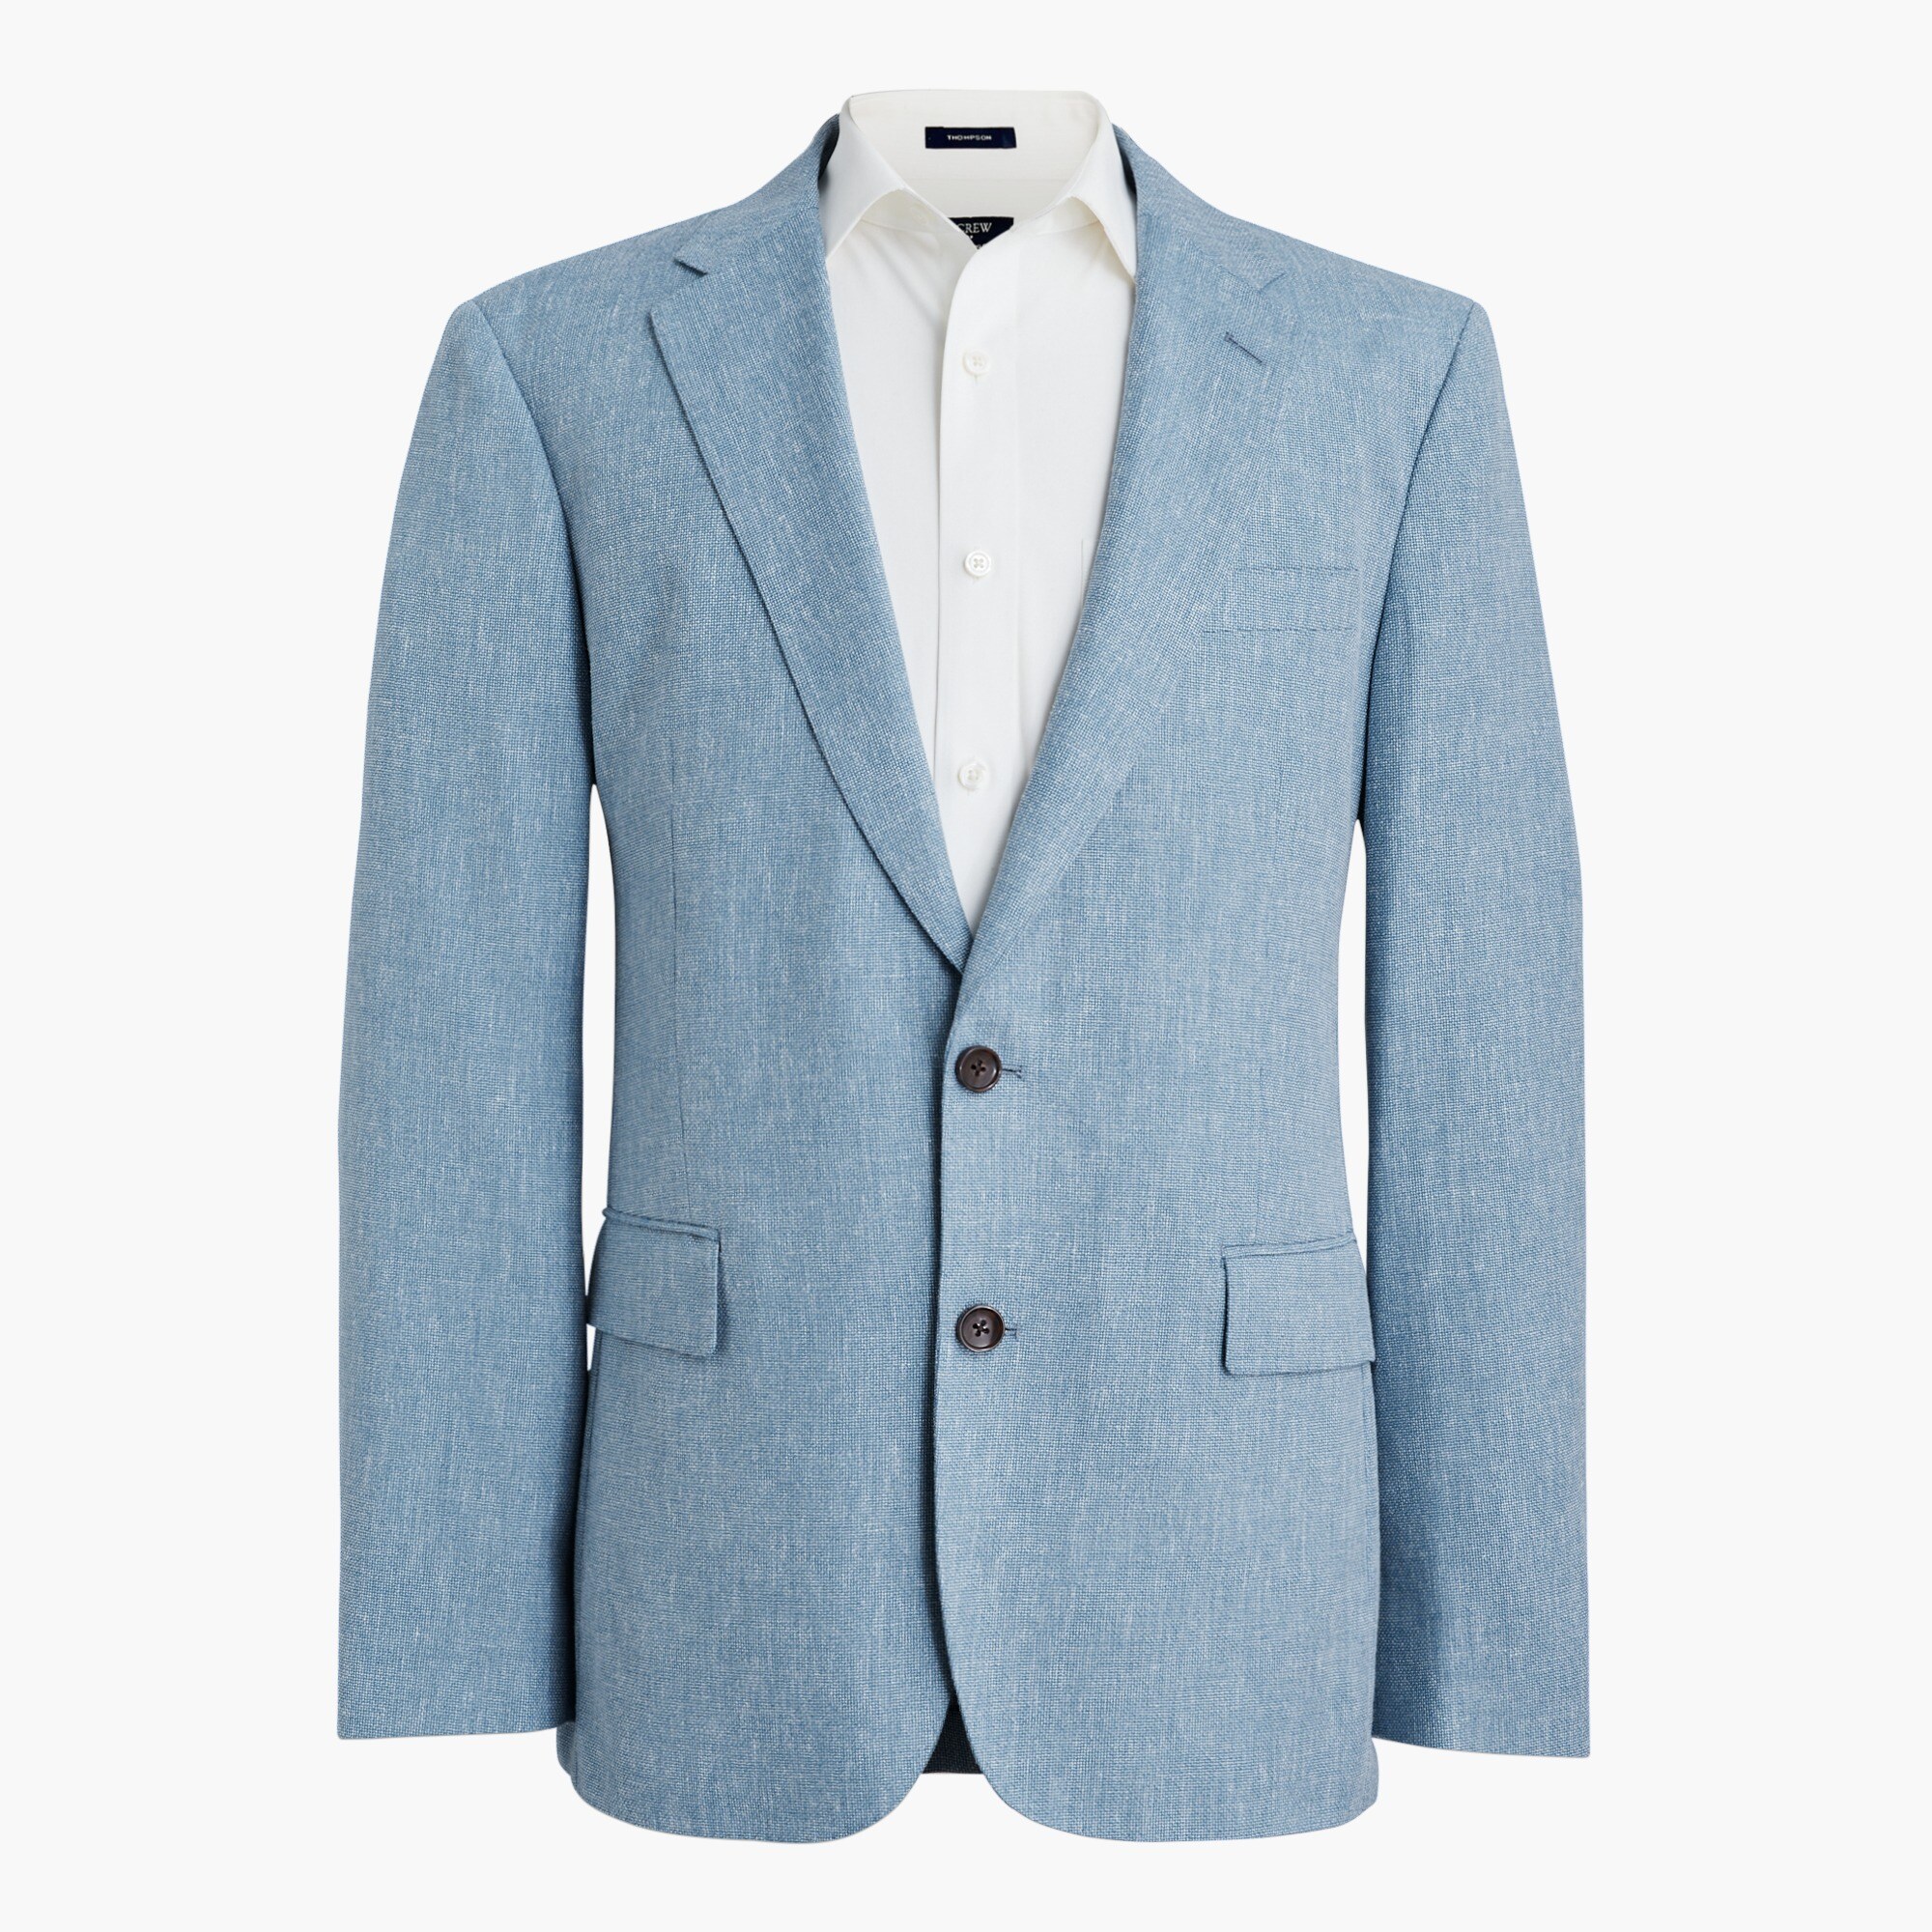  Slim-fit Thompson basket-weave suit jacket